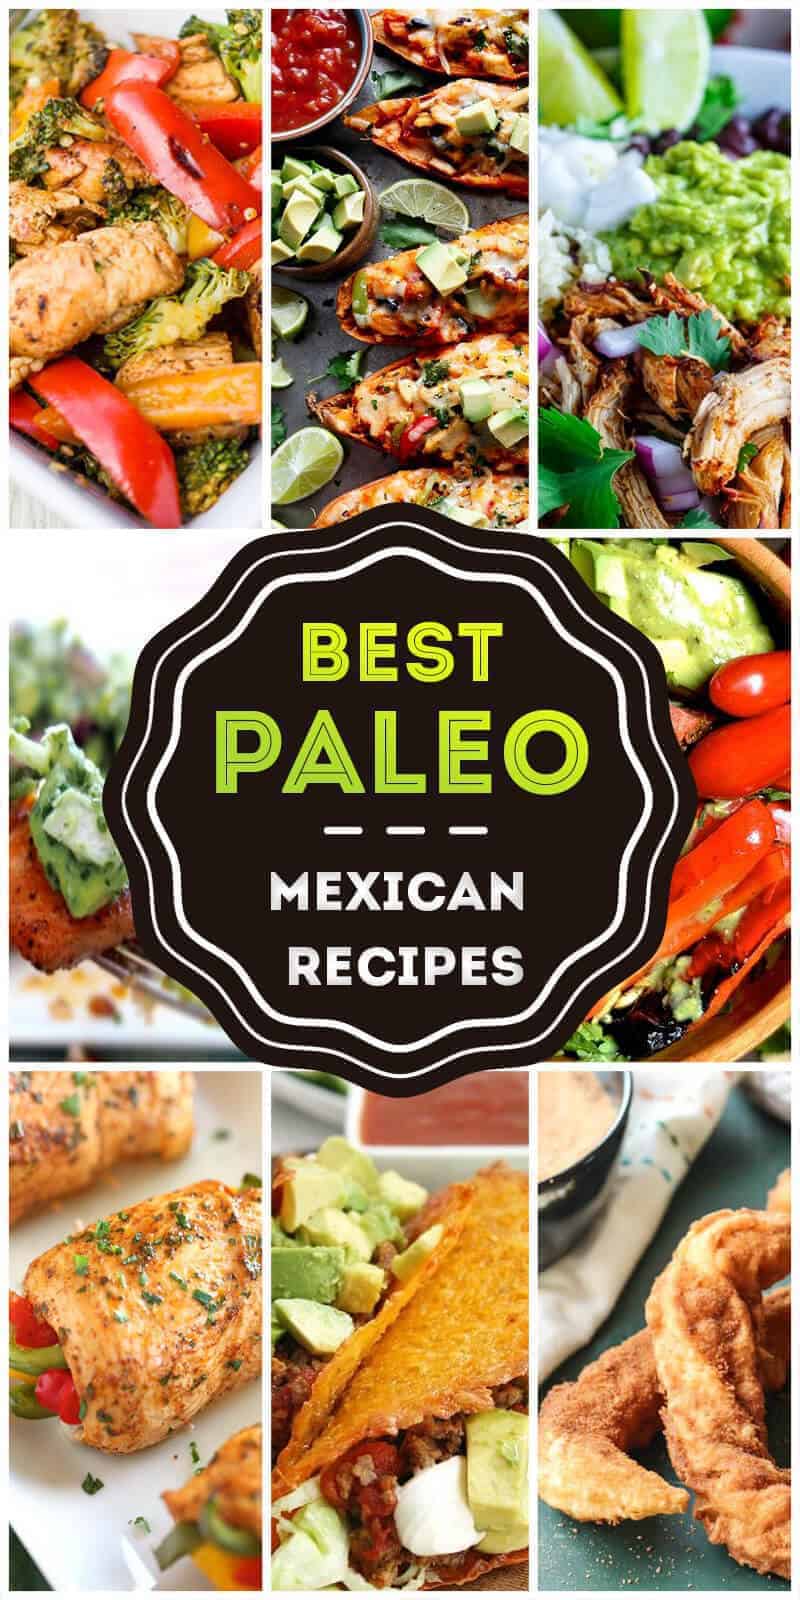 Paleo Mexican Recipes